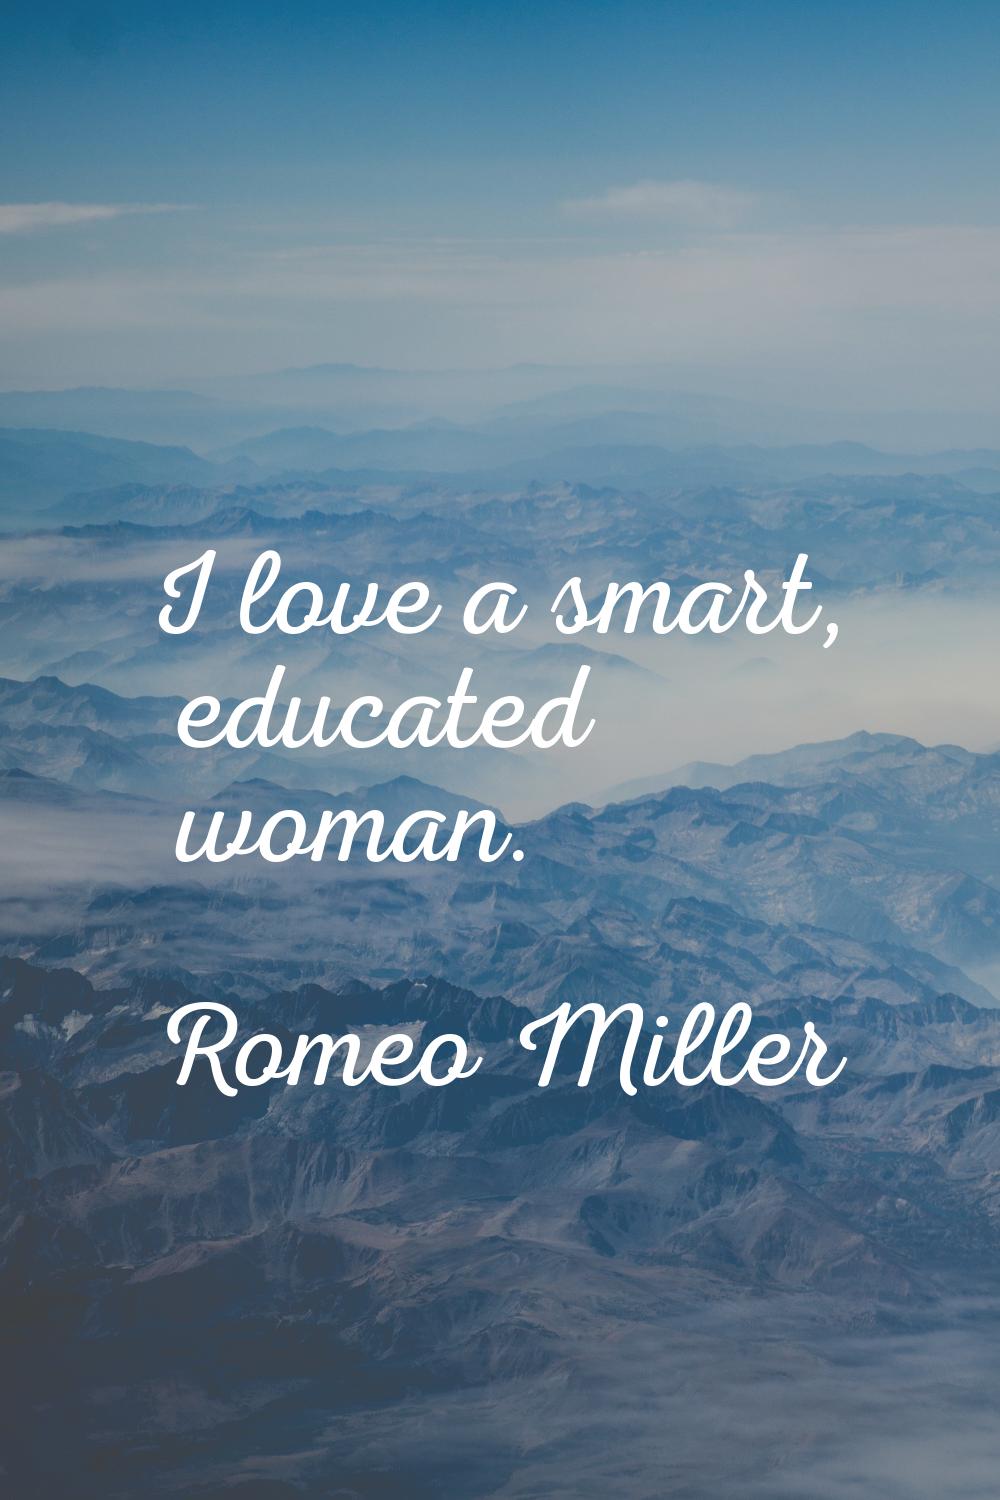 I love a smart, educated woman.